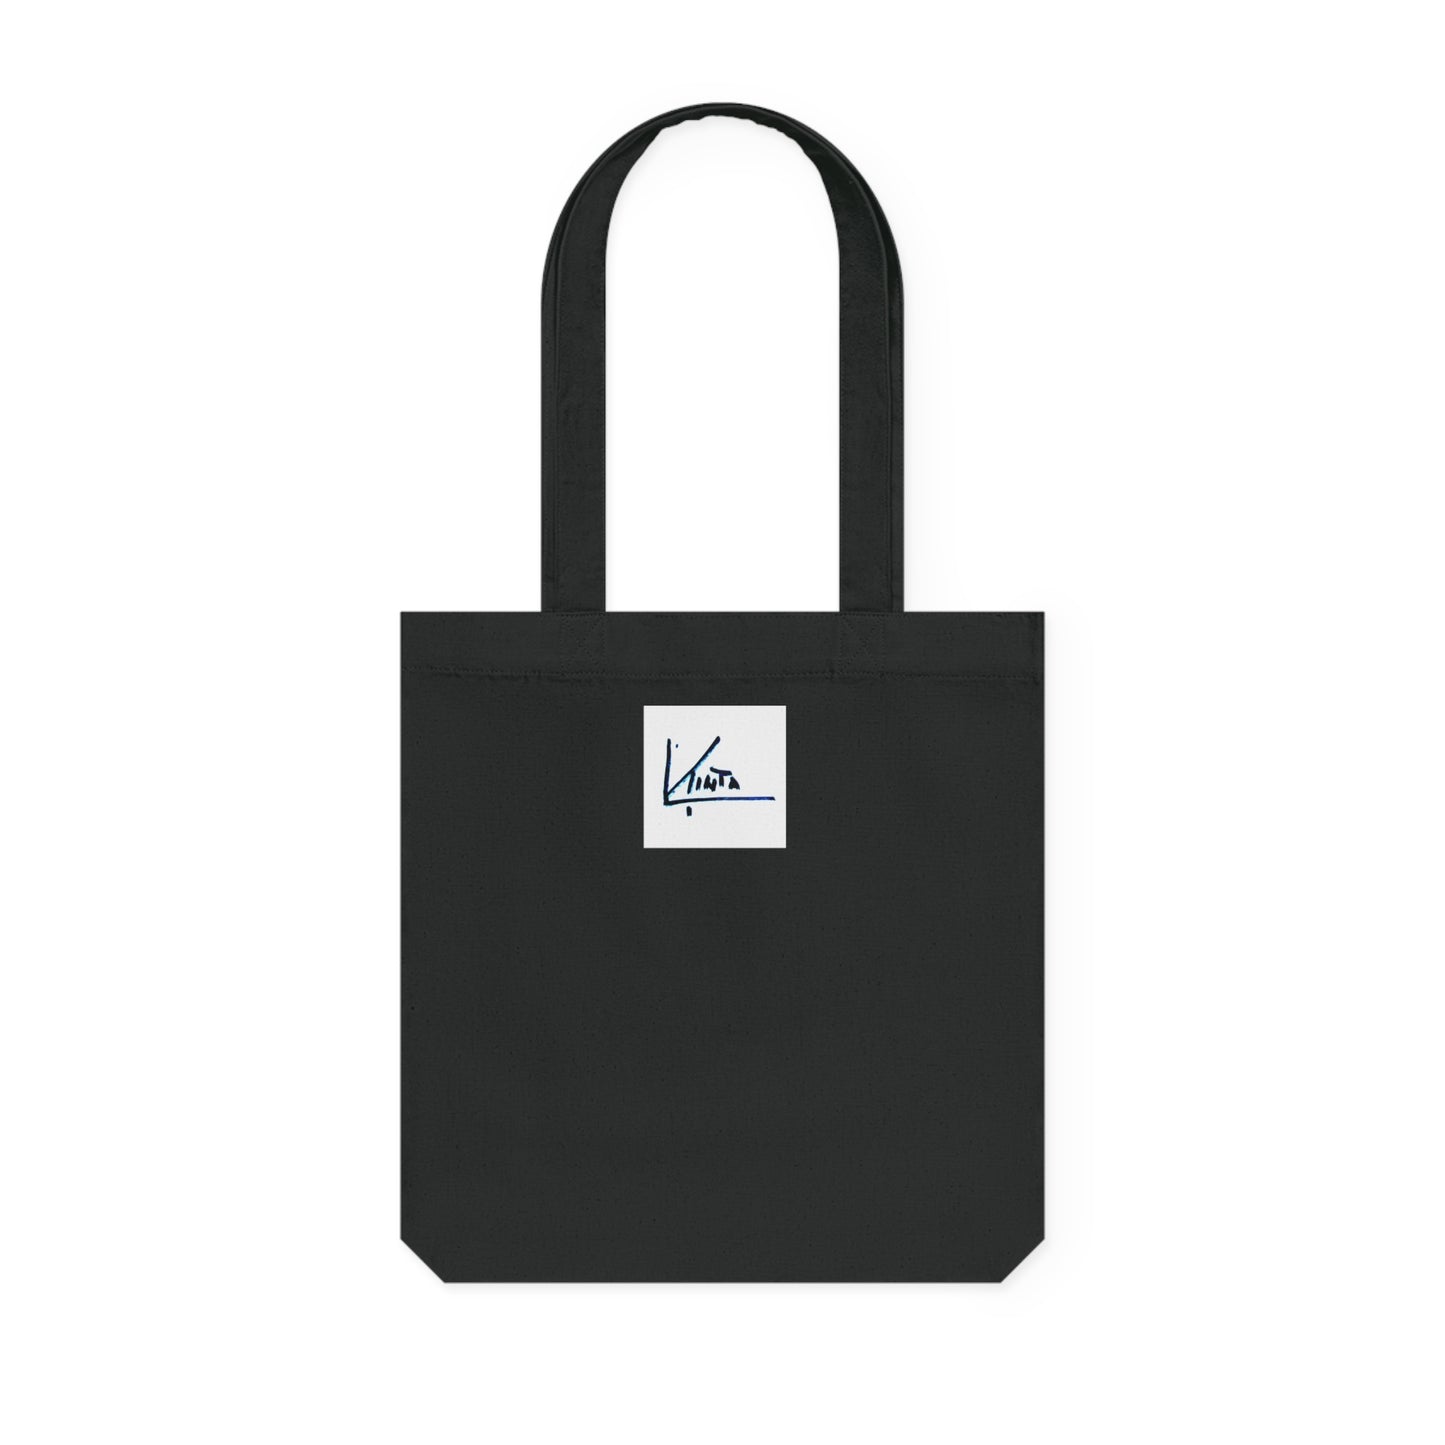 Inharitage Tote Bag & logo 